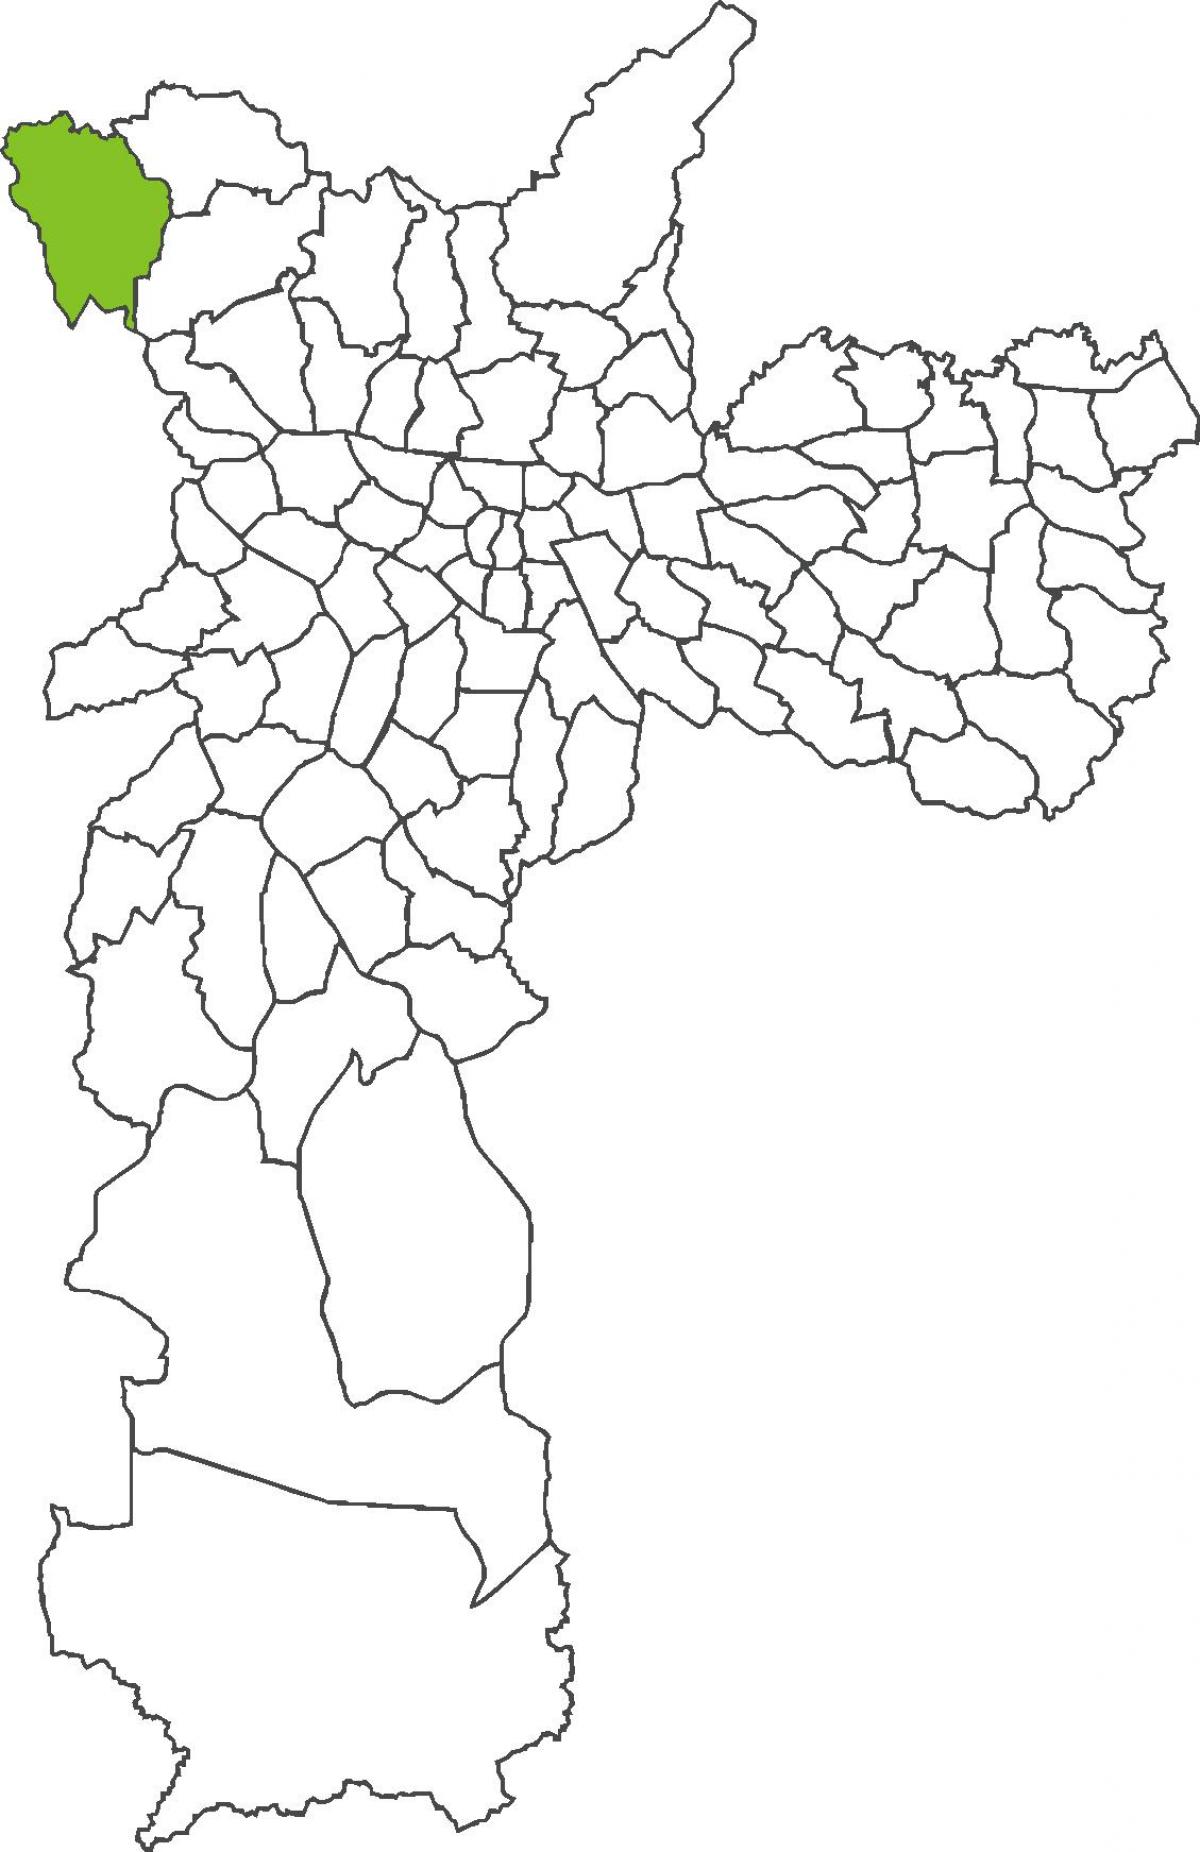 Zemljevid Anhangüera okrožno